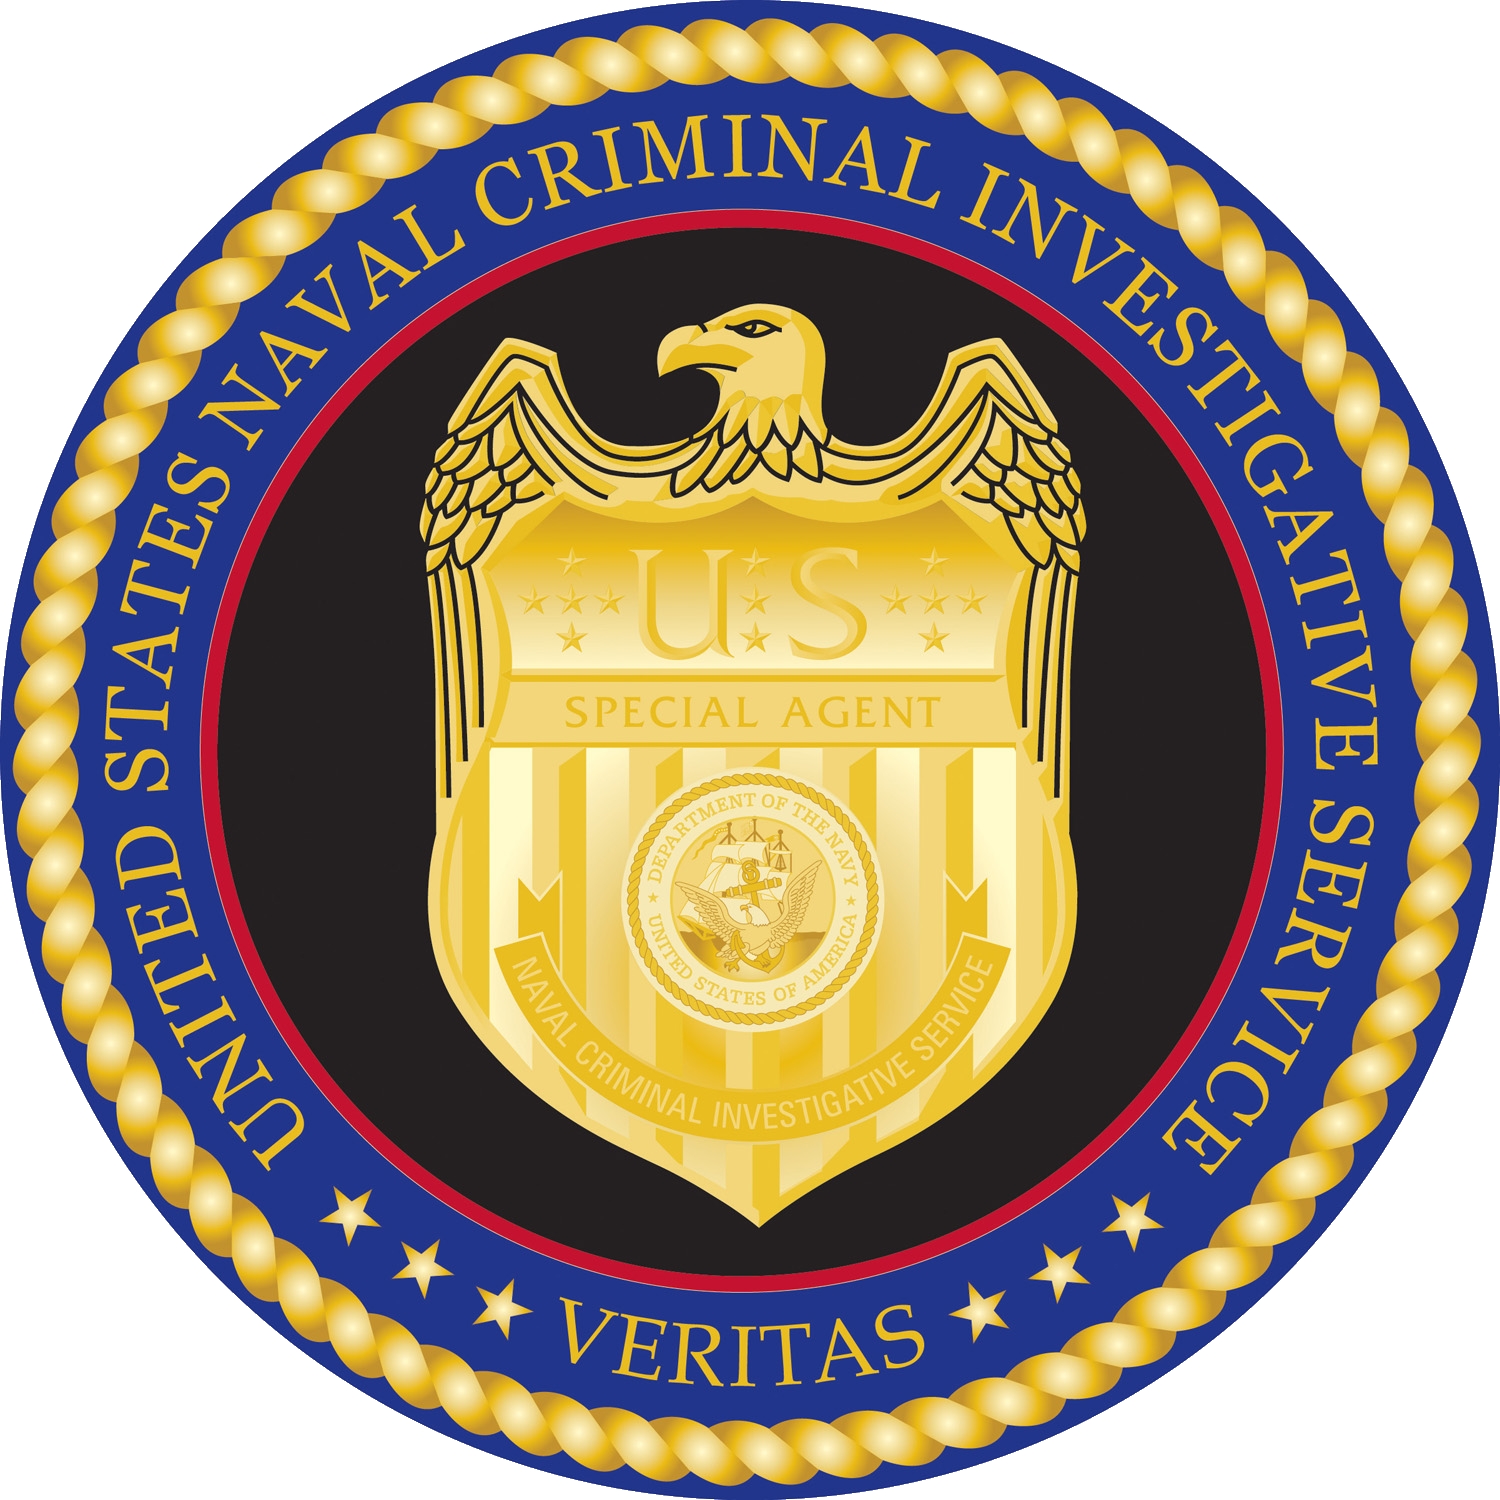 Naval Criminal Investigative Service Wikipedia